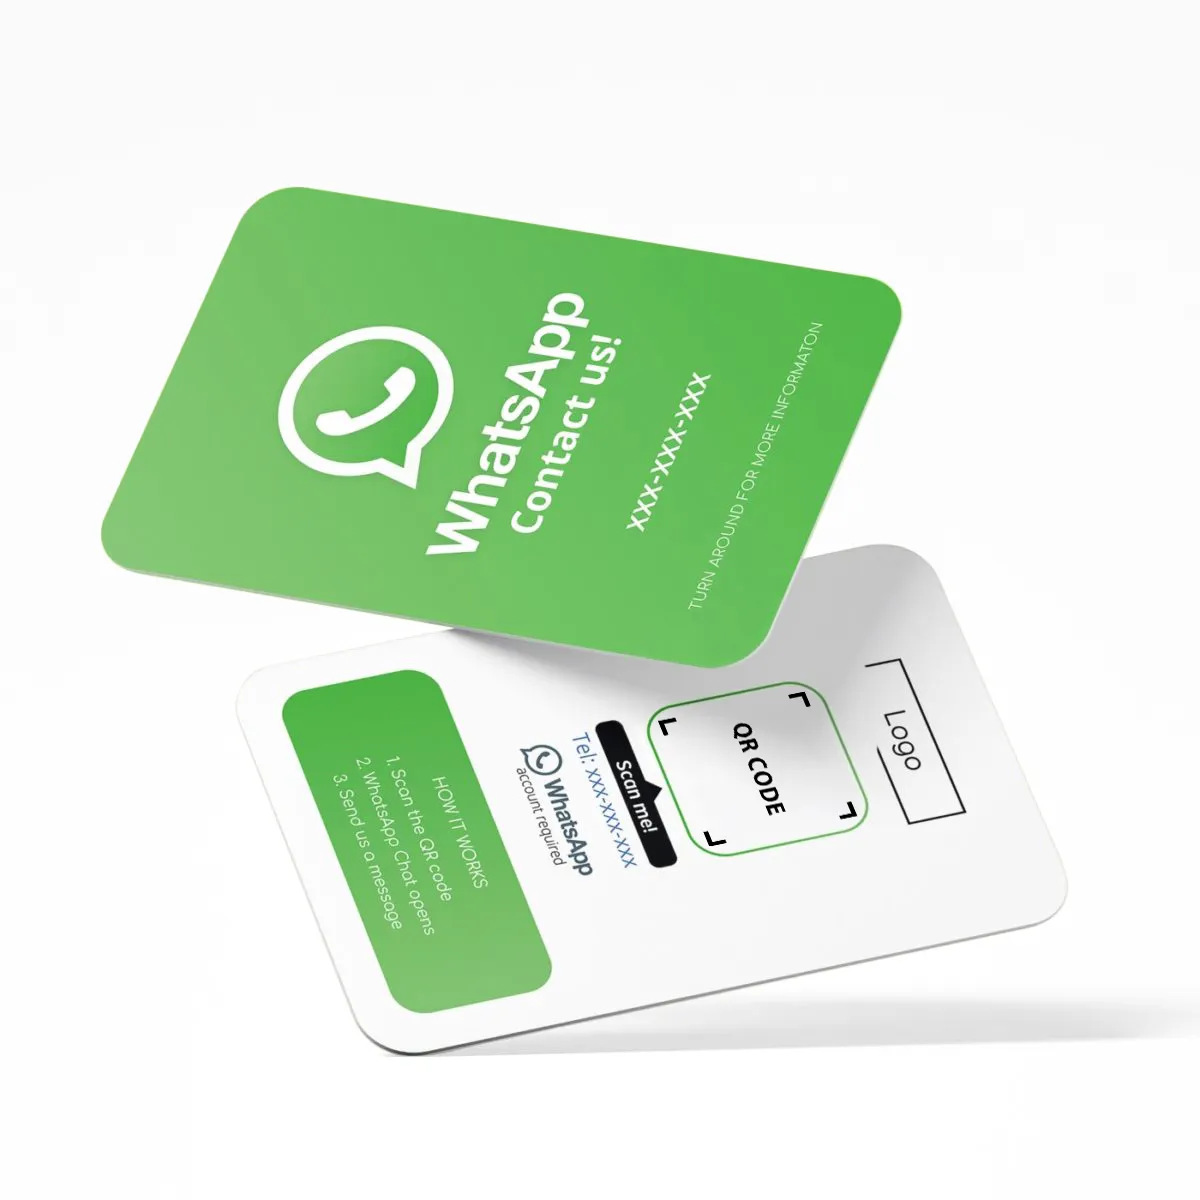 NFC function Card Scan QR Card social communicate Customized surface Phone Call Contact WhatsApp NFC Card